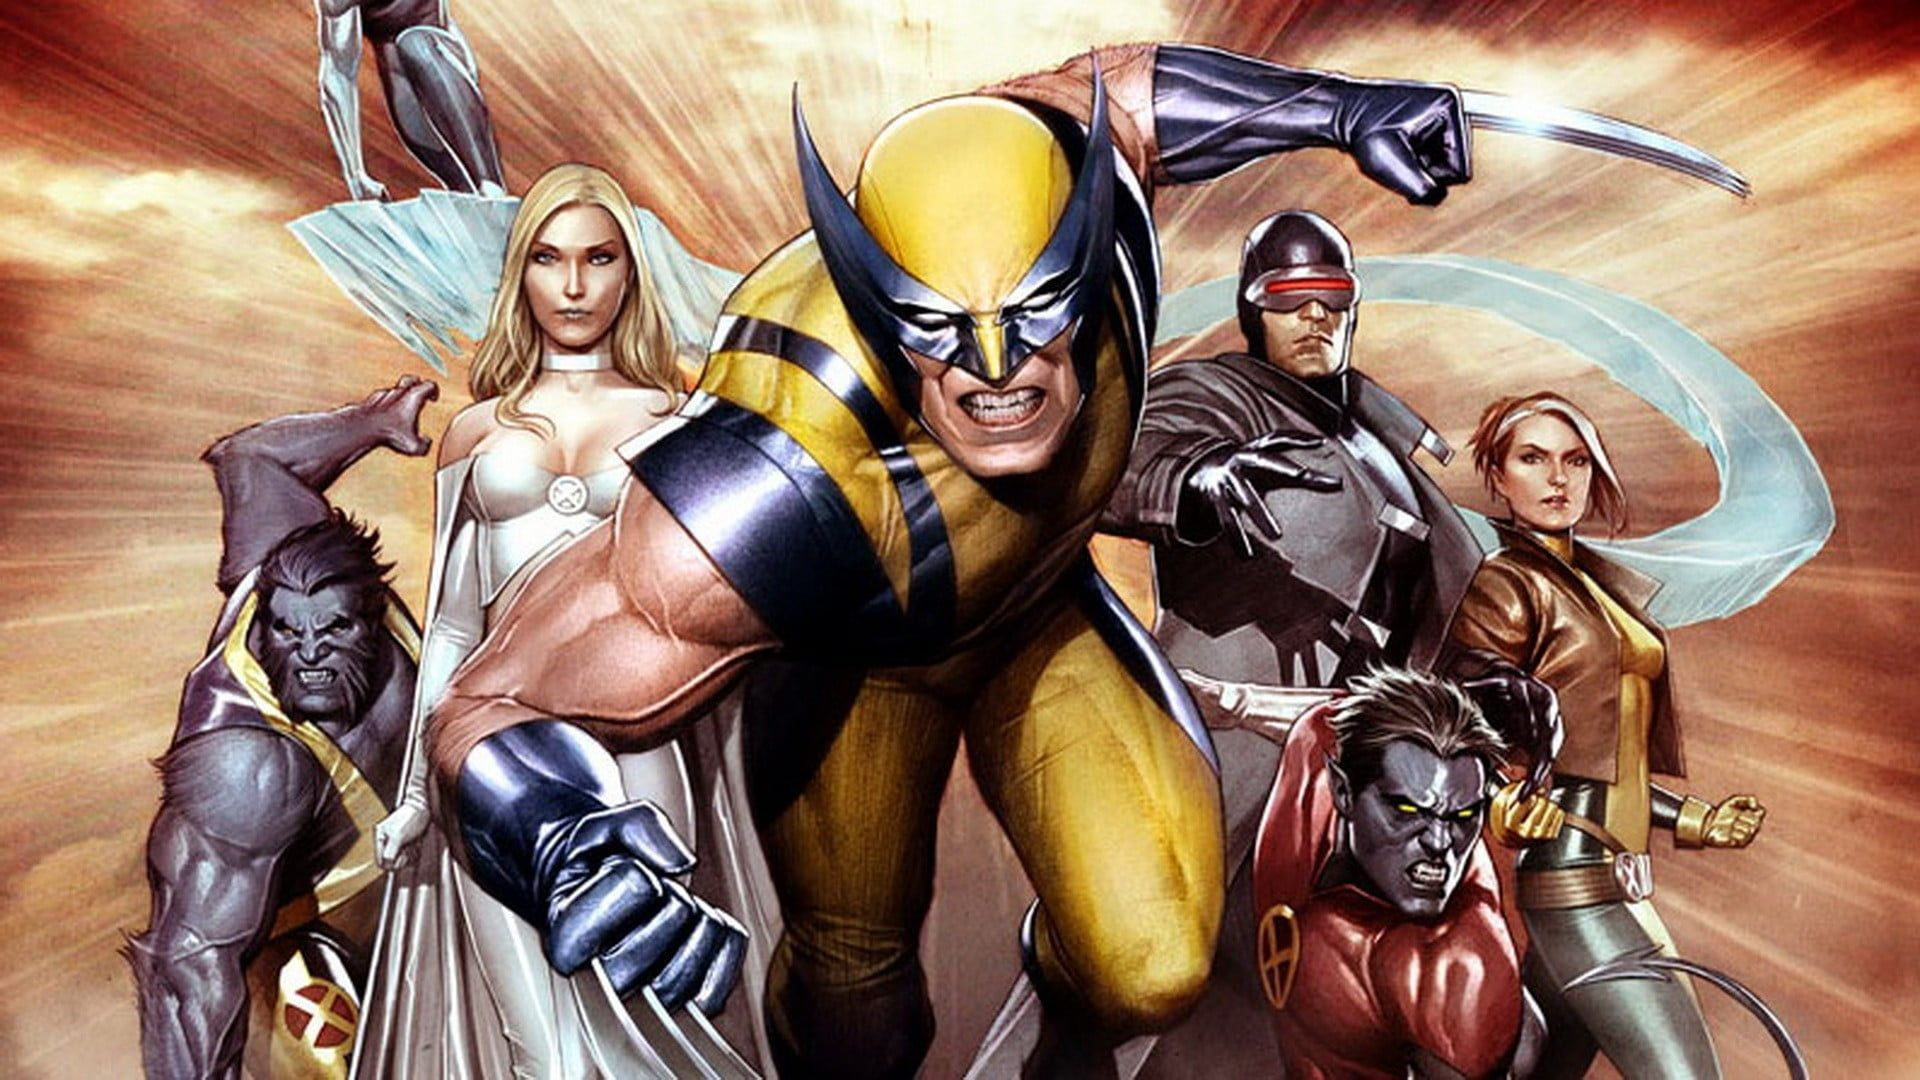 1920x1080 X-Men wallpaper #comics #Wolverine #X-Men Beast (character) Emma Frost #1080P #wallpaper #hdwallpaper #desktop | X-men wallpaper, X men, Wolverine